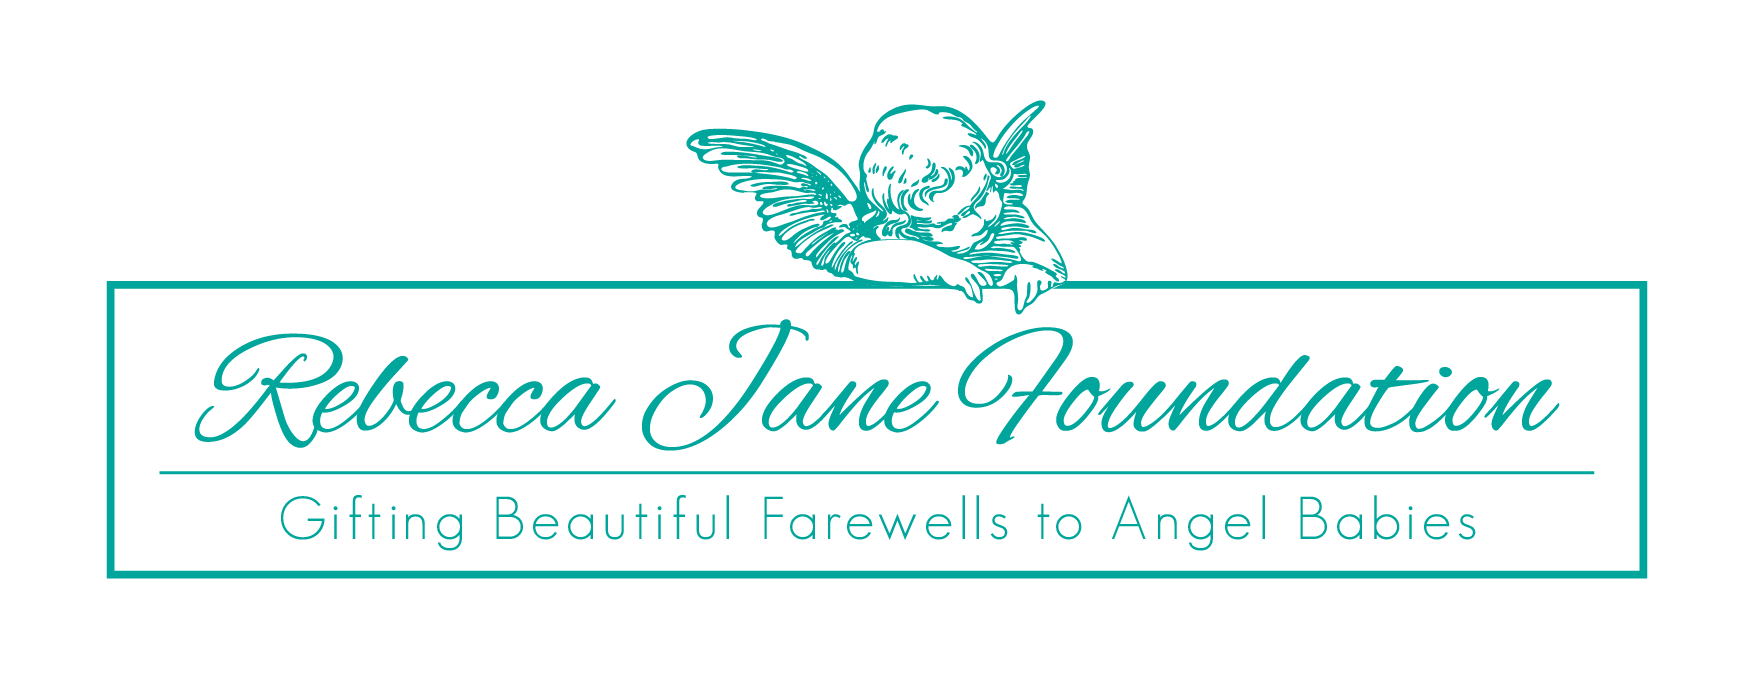 Rebecca Jane Foundation - Gifting beautiful farewells to Angel Babies